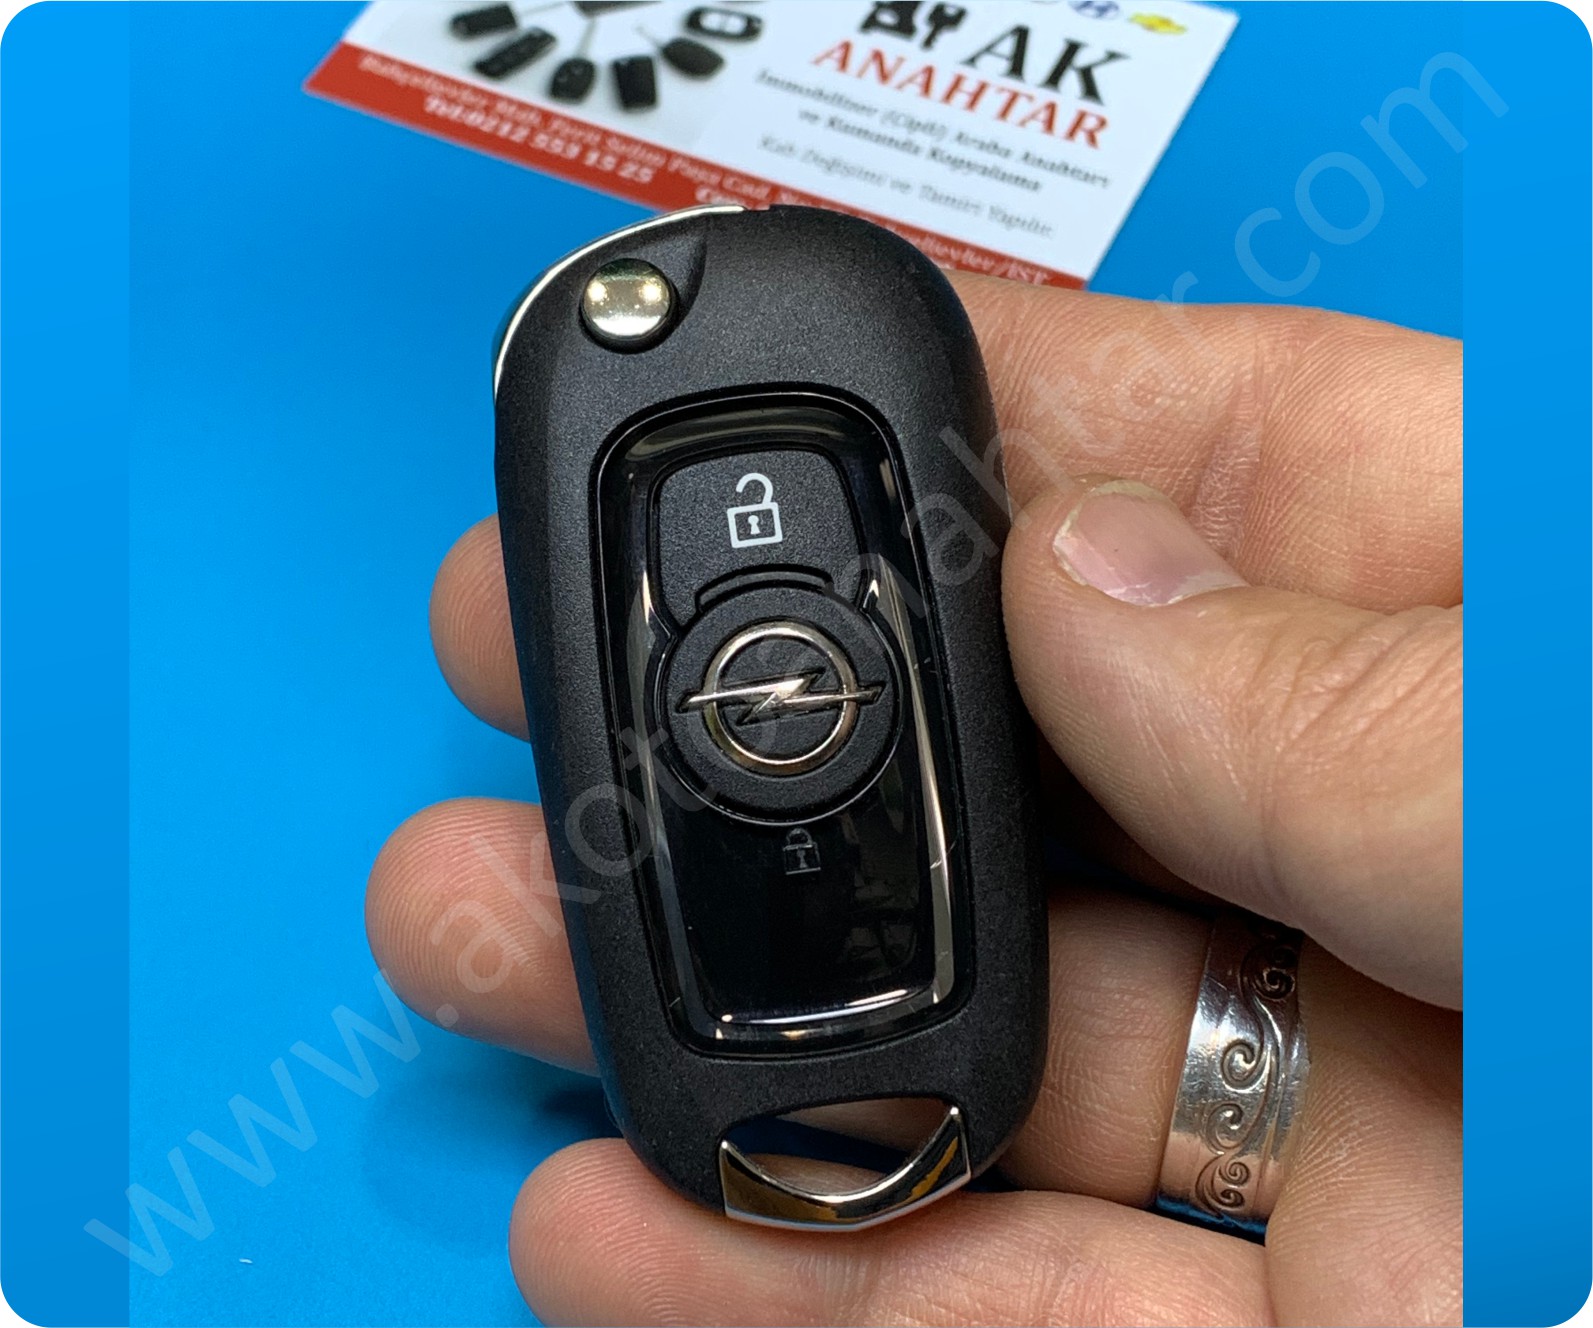 opel astra k anahtari anahtar key yedek yaptirma fiyati kopyalama cogaltma kayip 2015 2016 2017 2018 2019 model - Opel Astra K Anahtarı | Yedek ve Kayıp Anahtar Yapımı